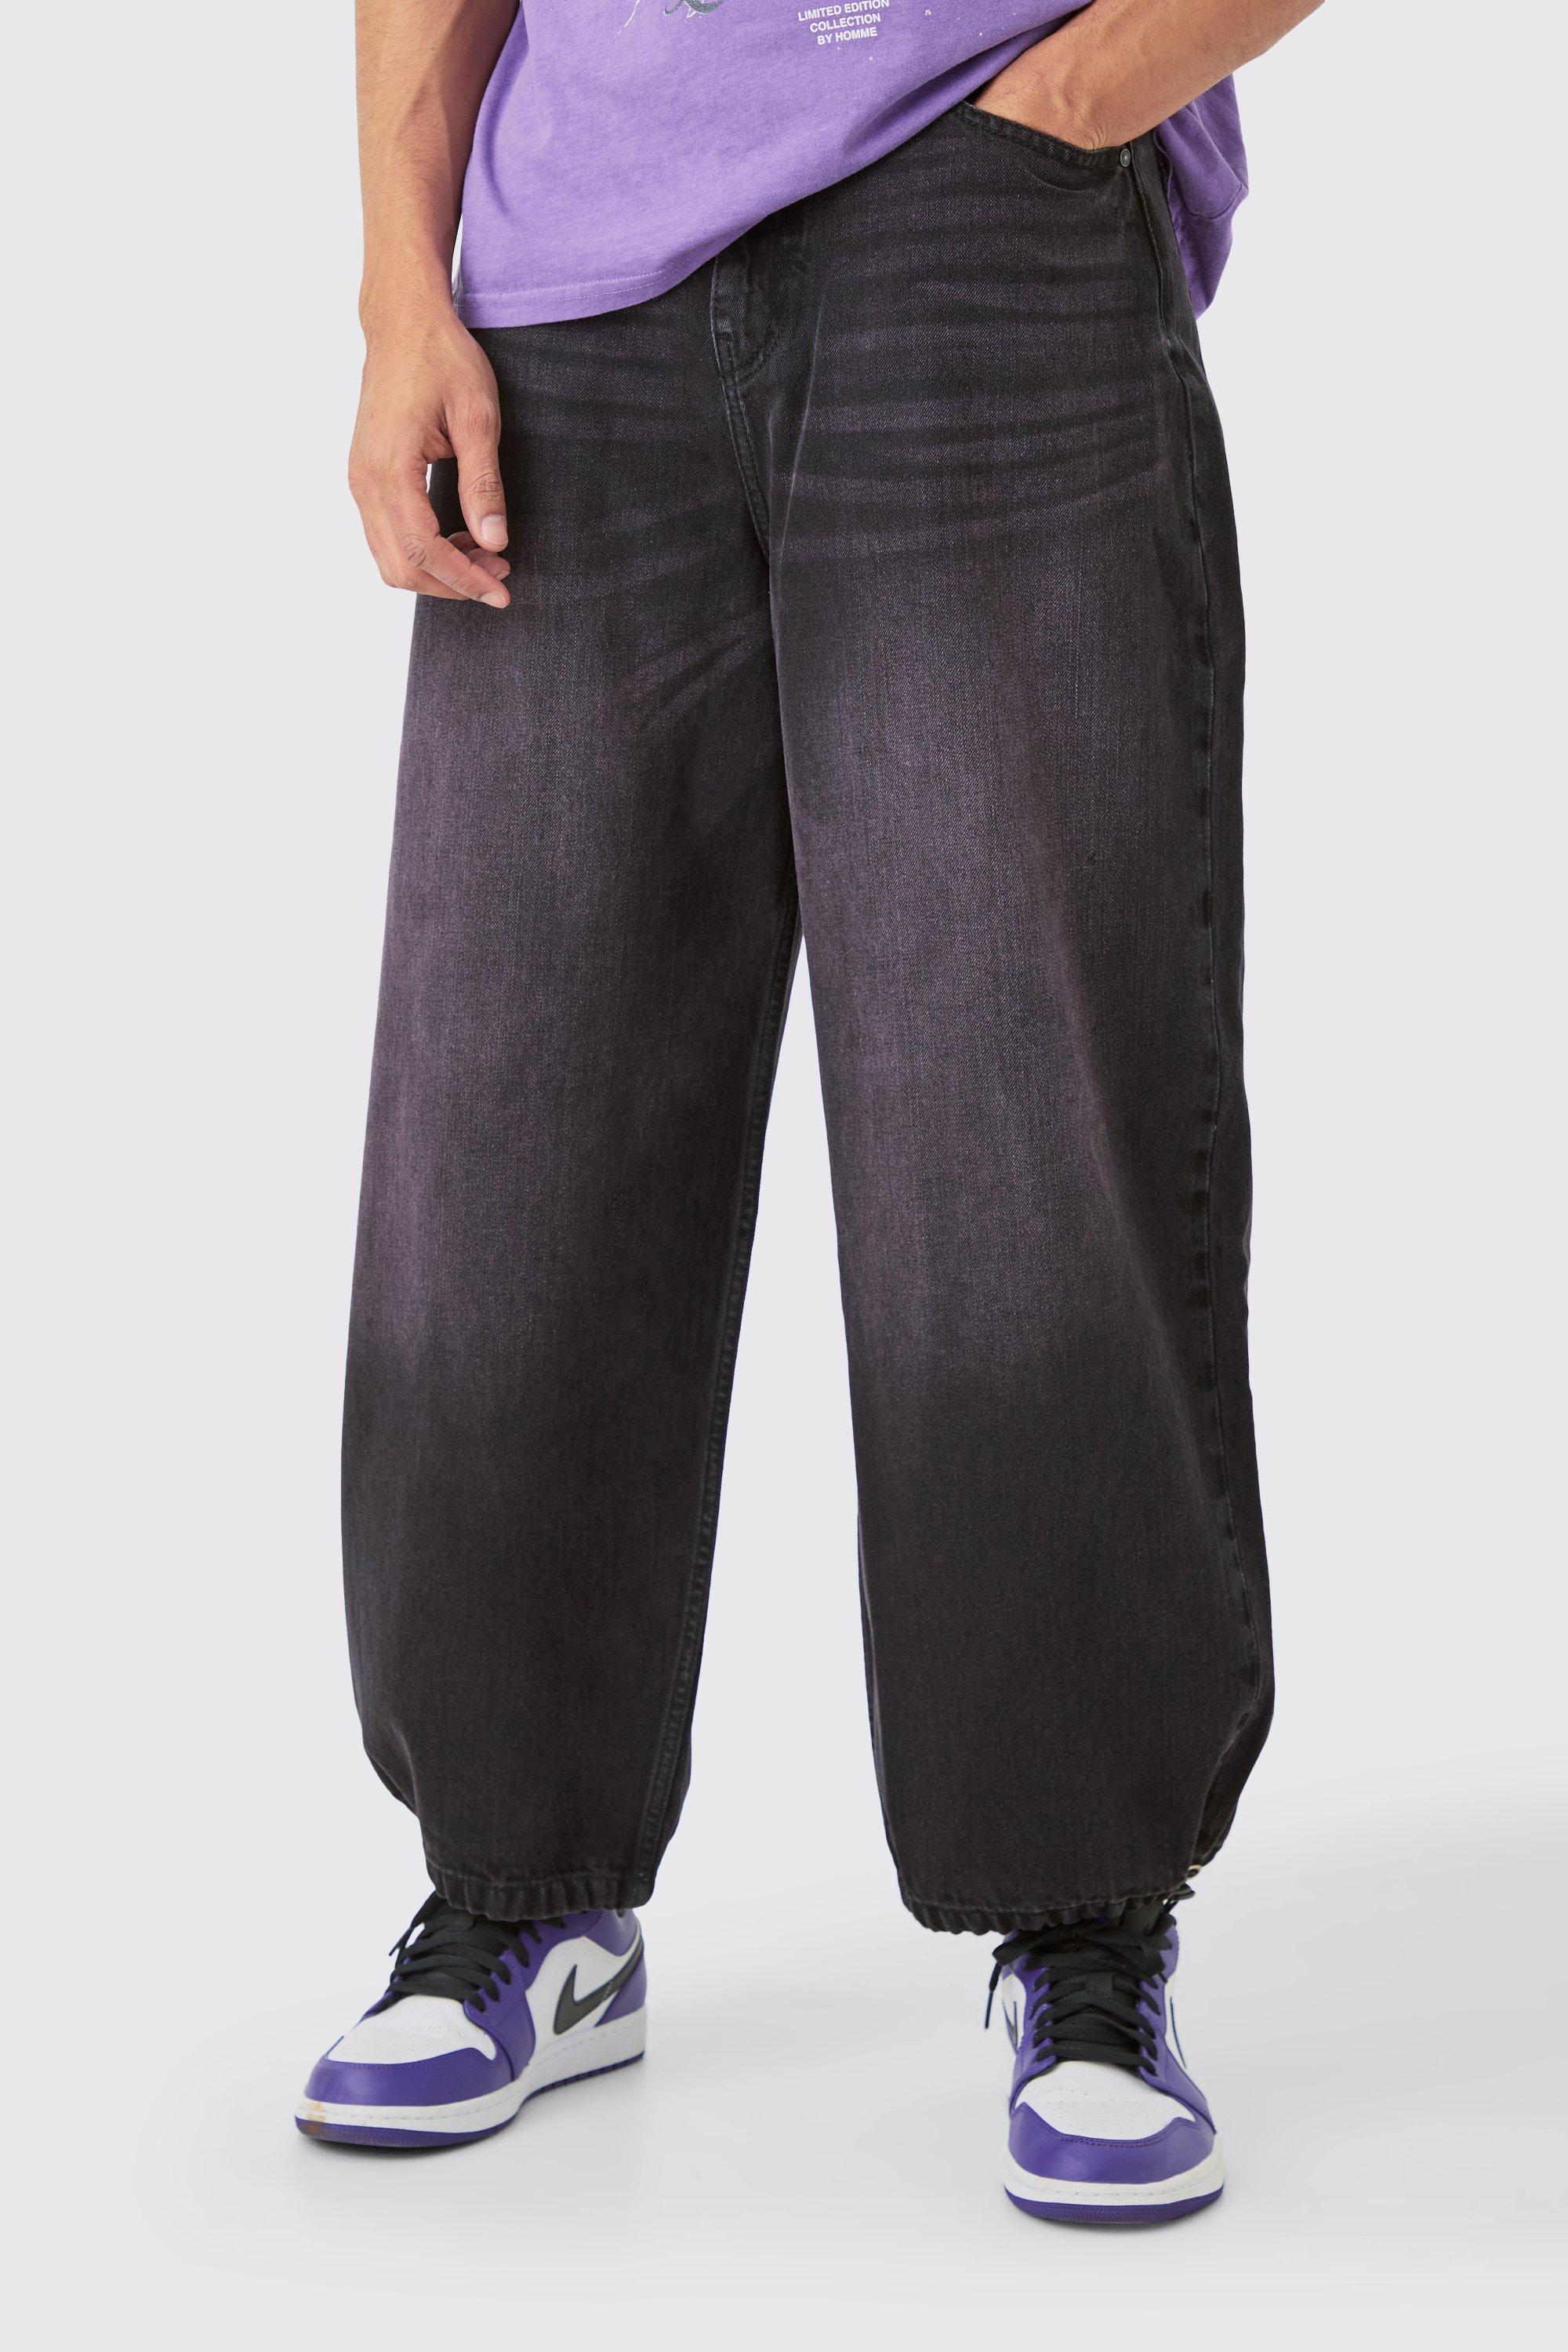 Image of Purple Tinted Black Denim Parachute Jeans, Purple